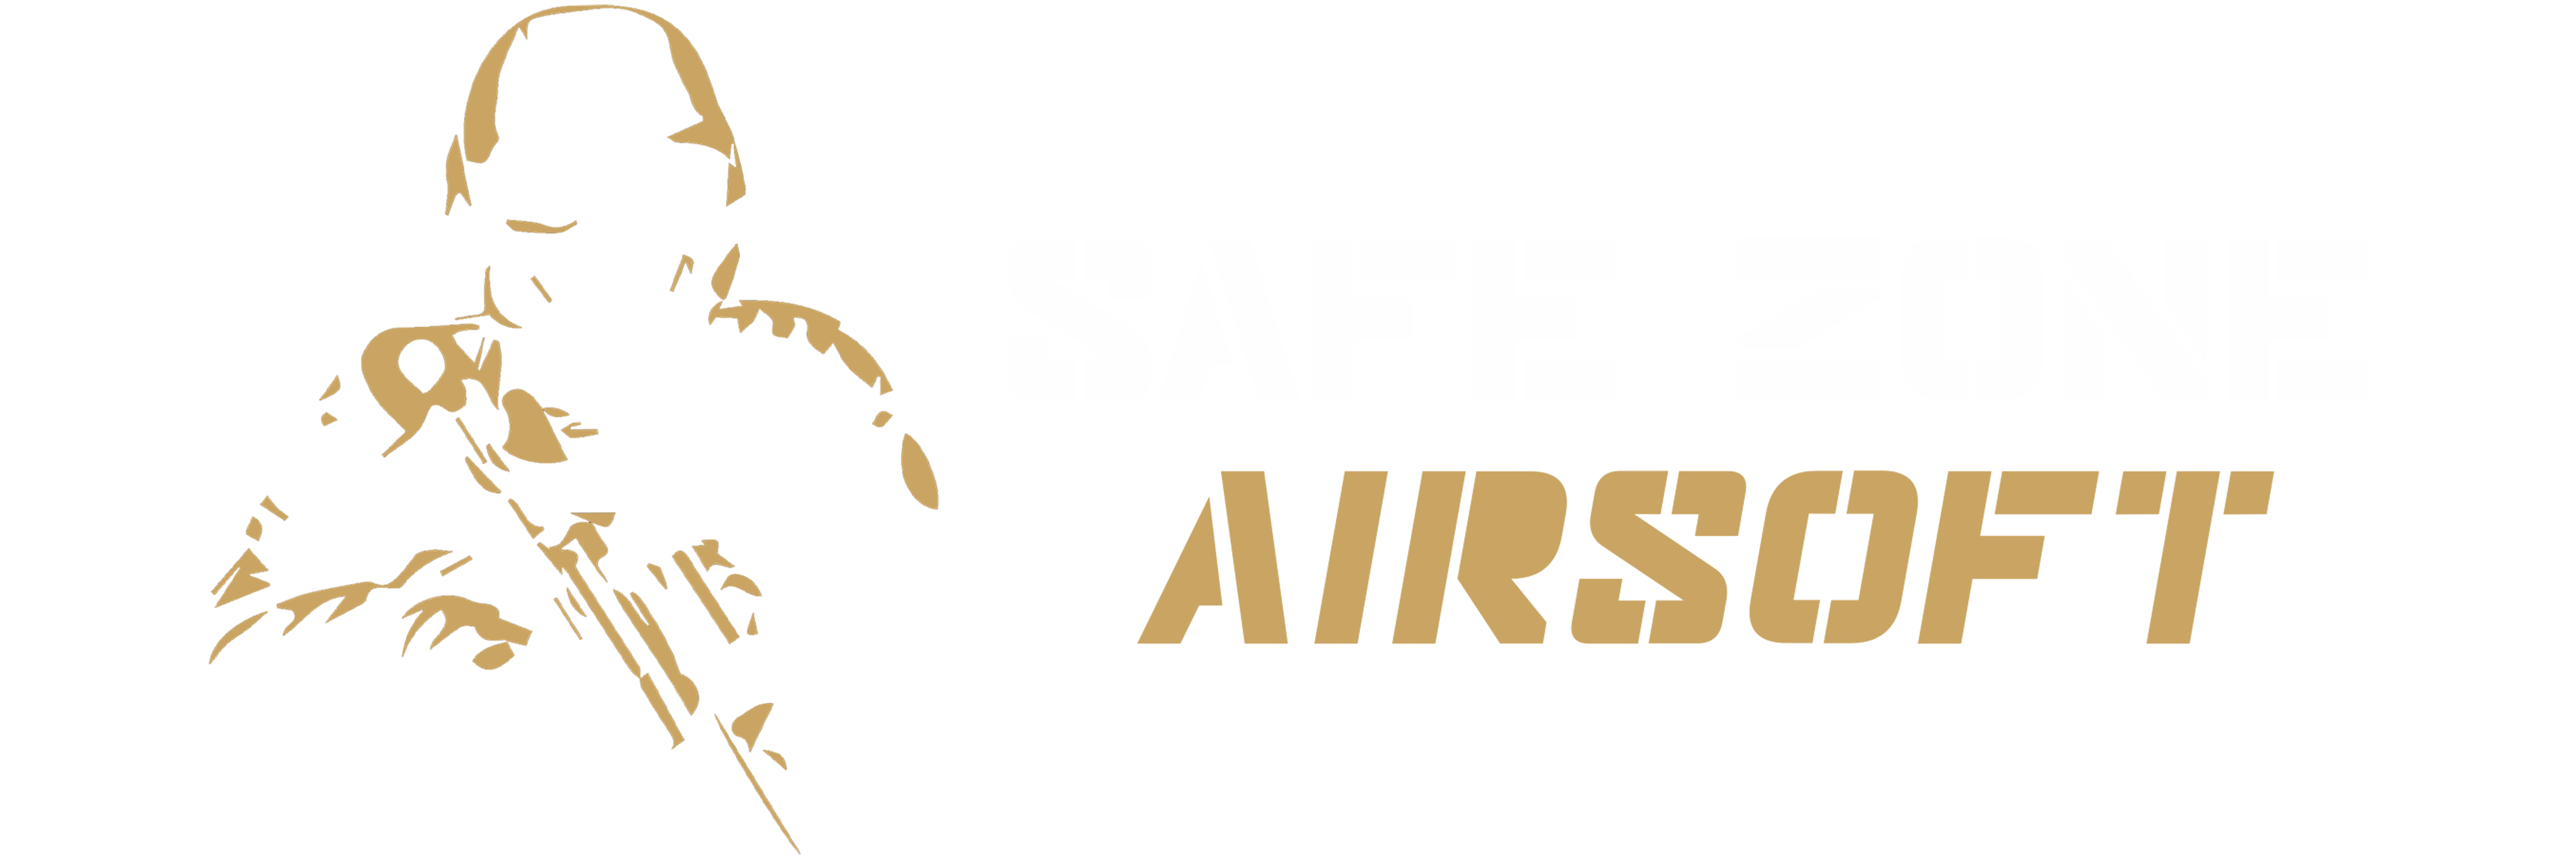 SAFE ZONE